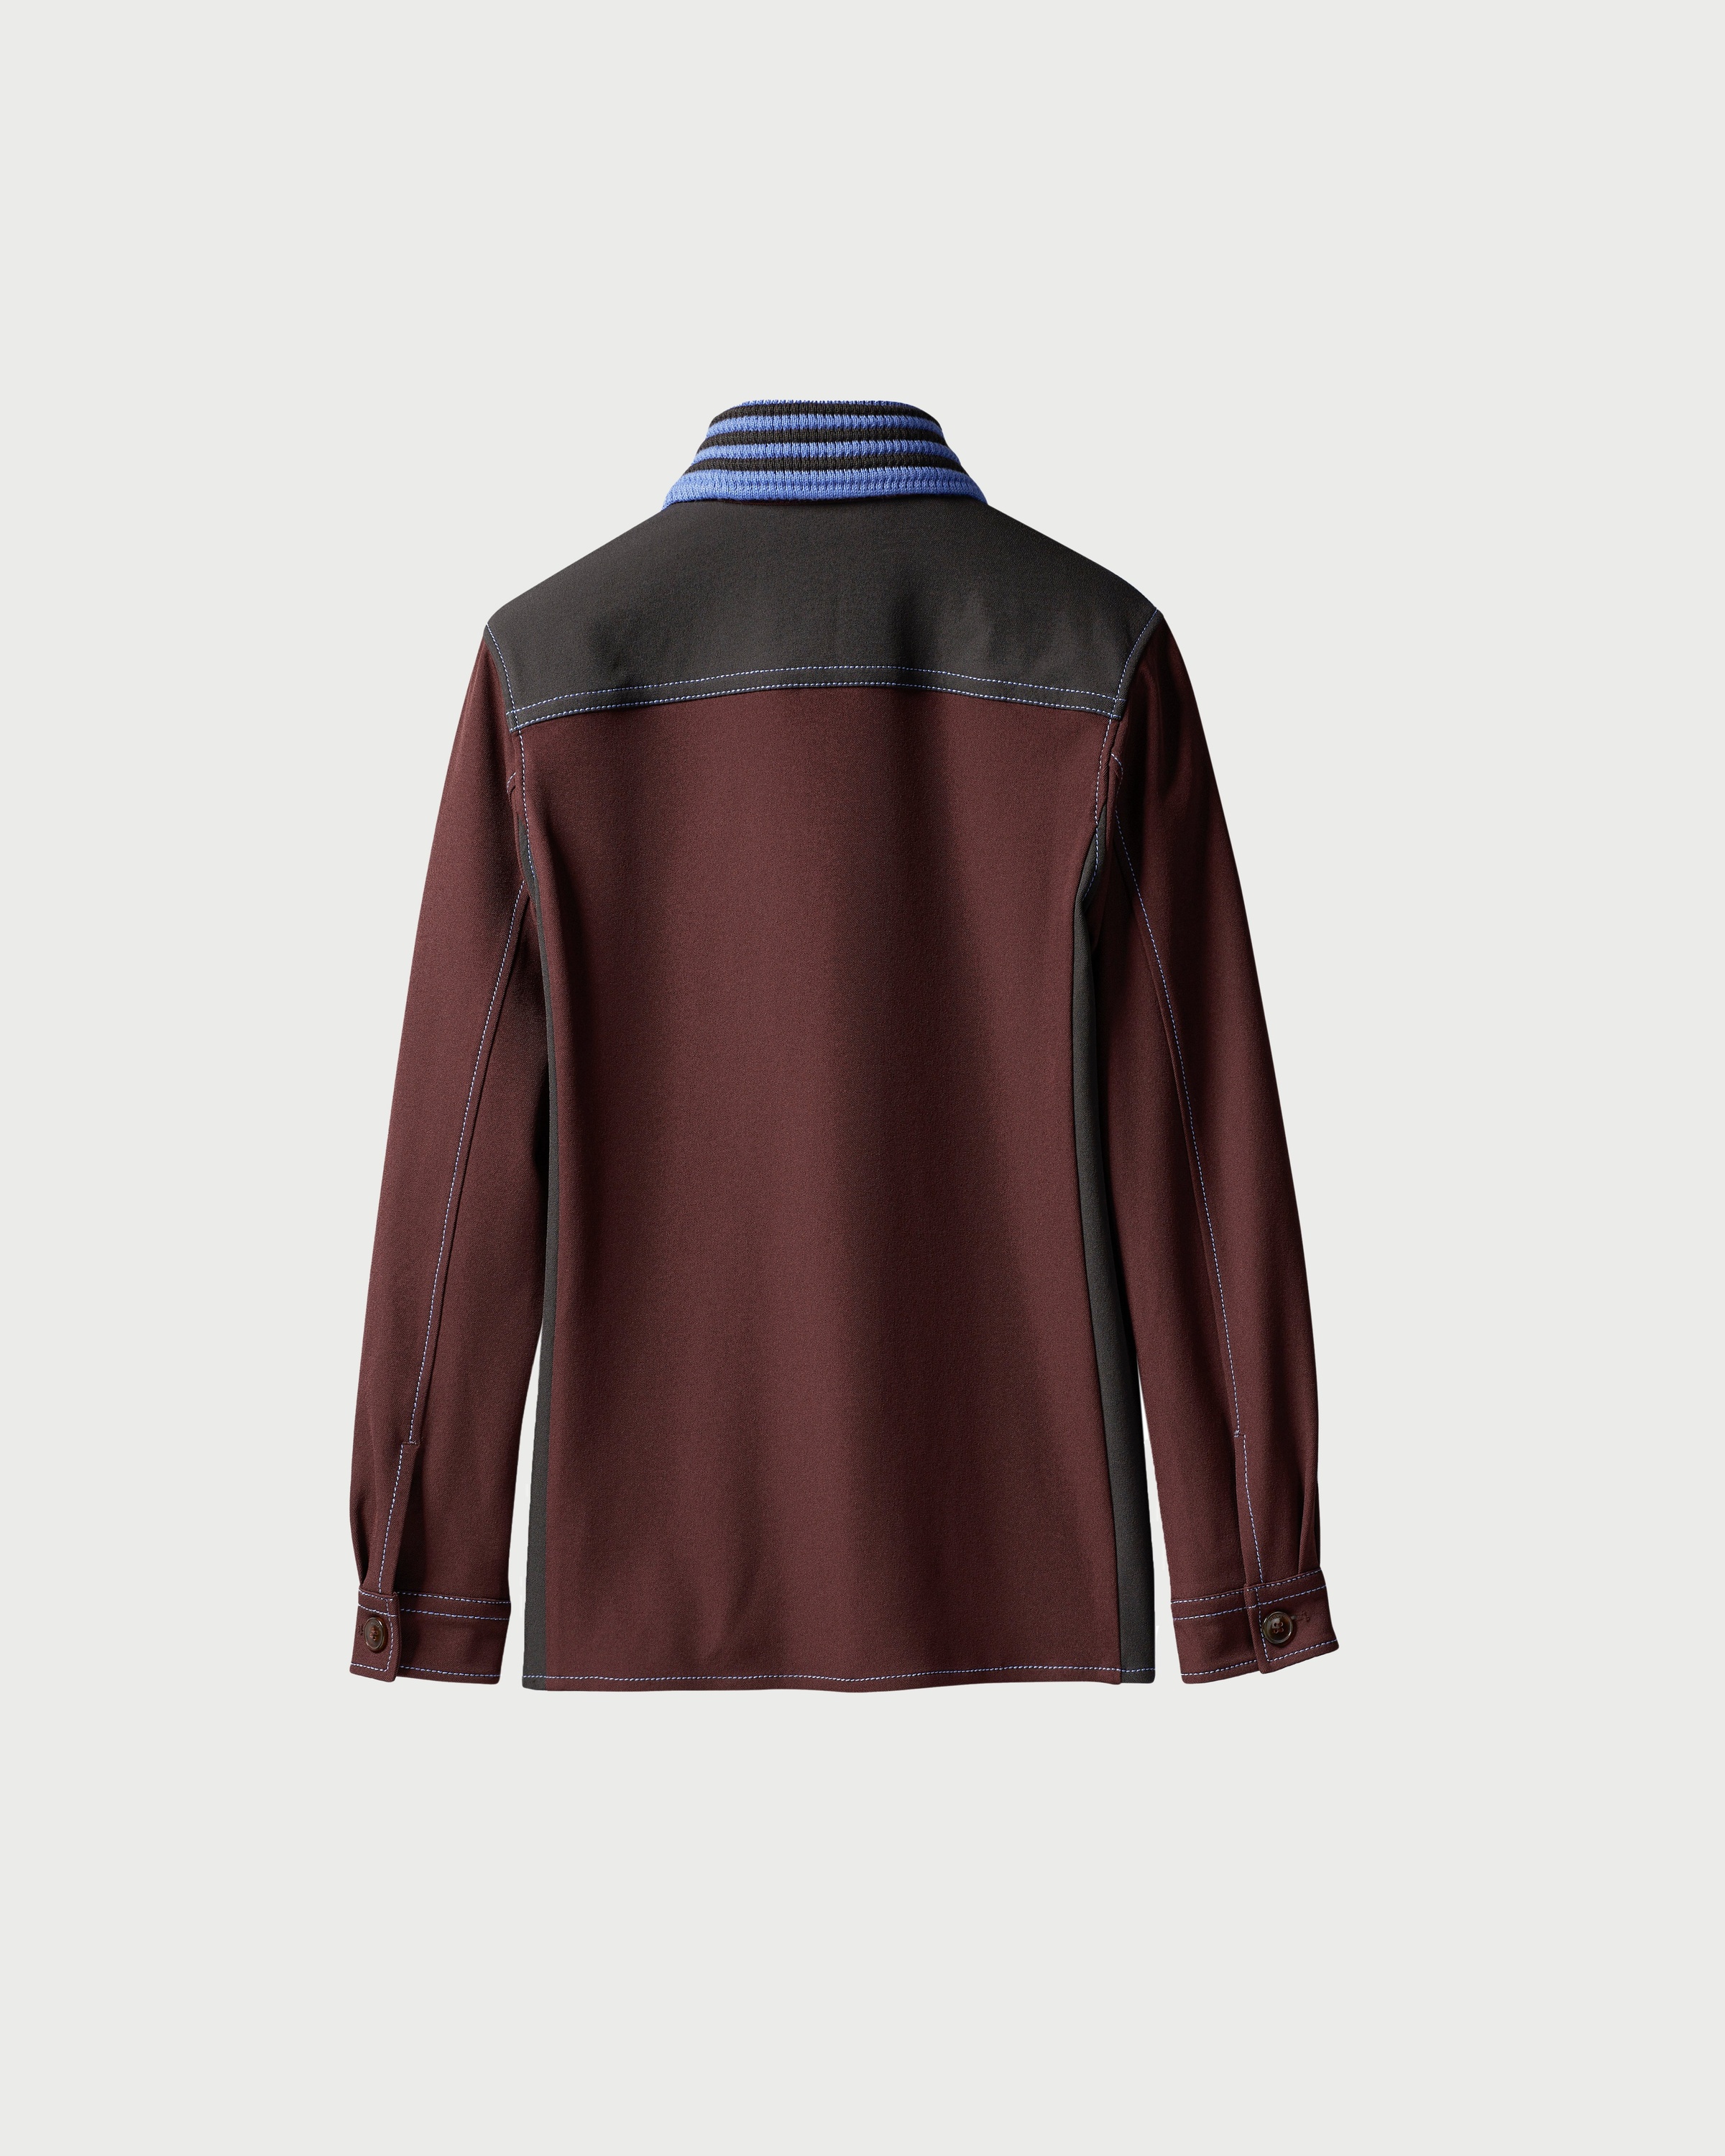 Adidas x Wales Bonner – Rock Blouson Brown - Longsleeve Shirts - Brown - Image 2